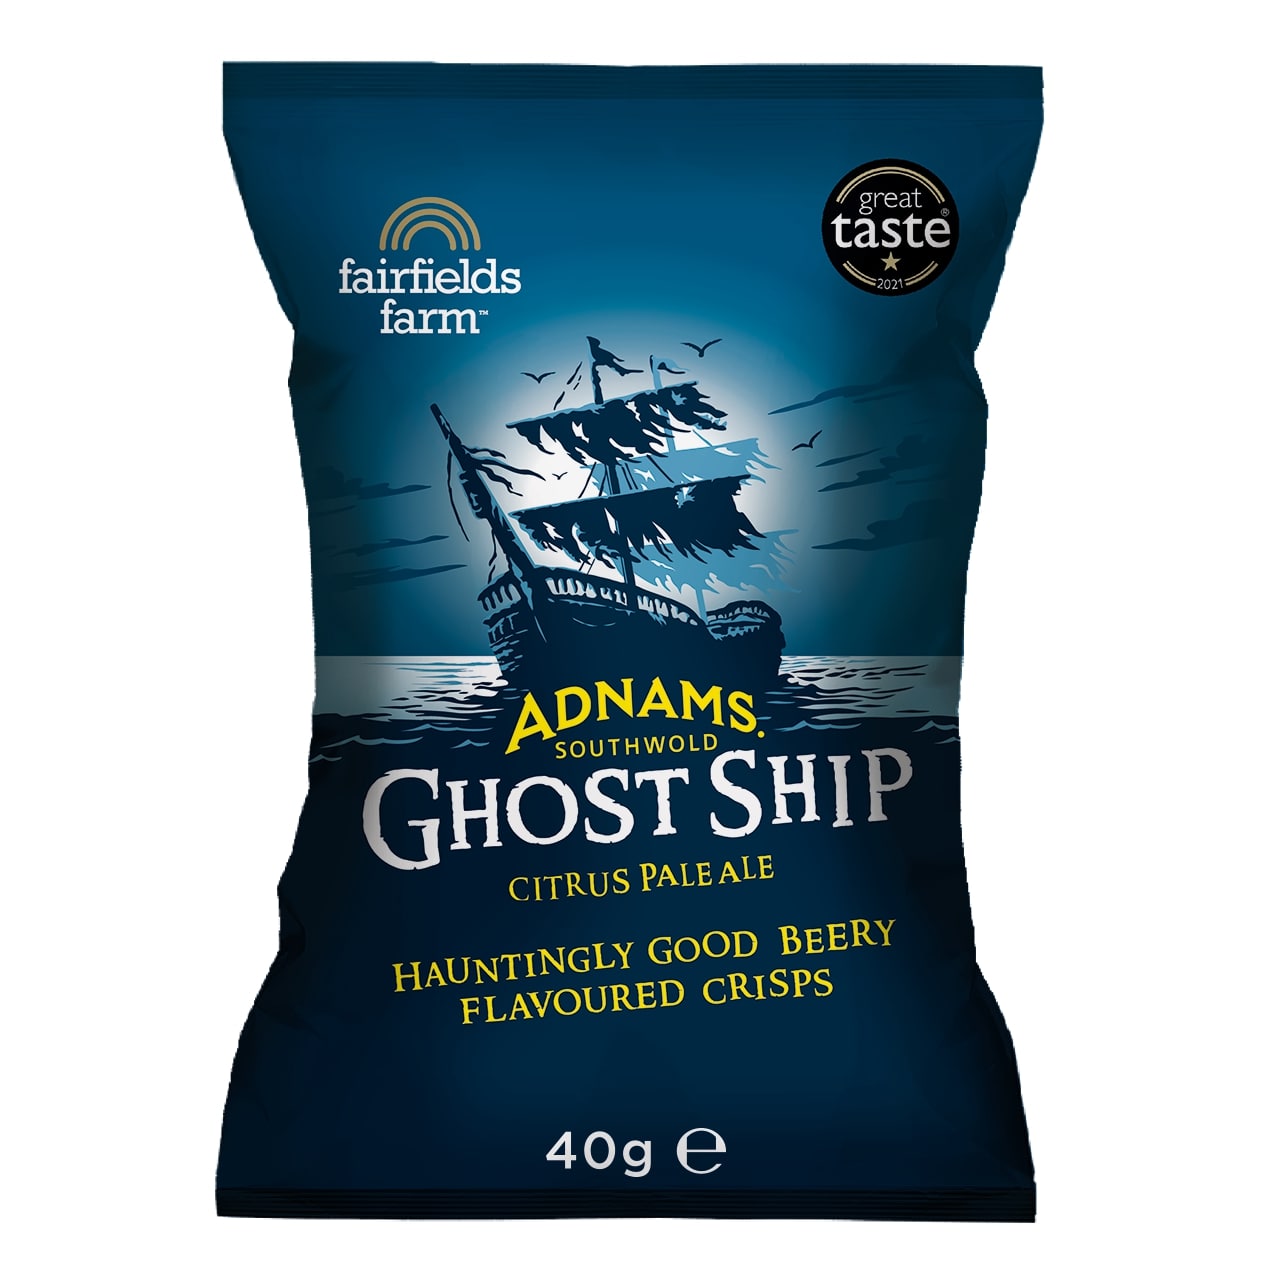 Adnams Ghost Ship – 36 x 40g bags